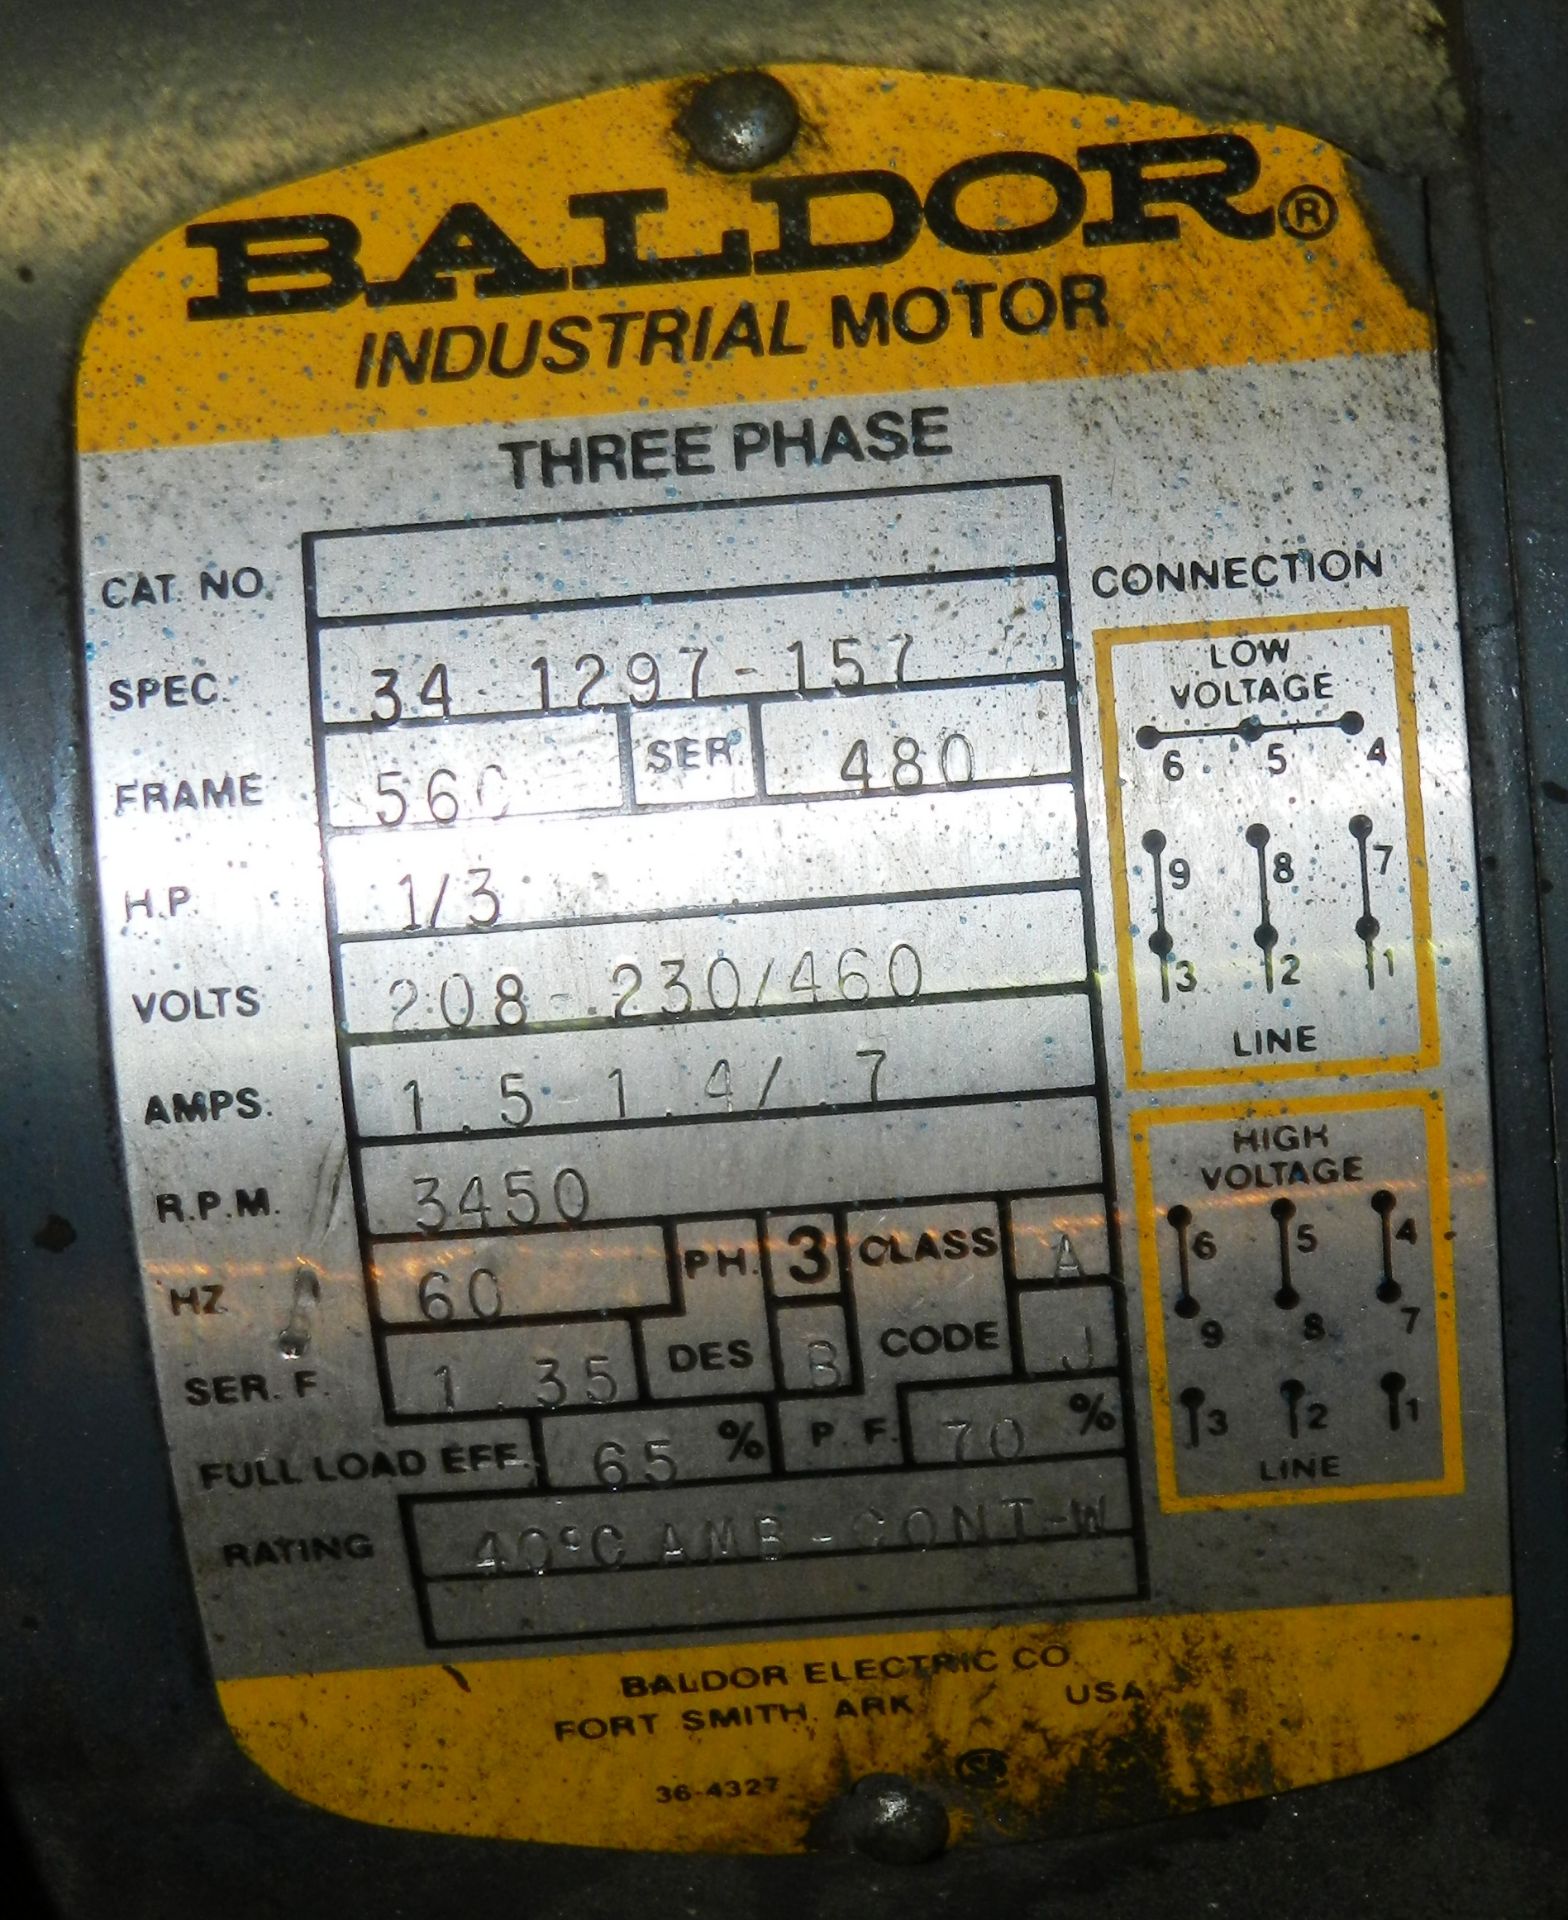 Baldor 1/3 HP Industrial Motor